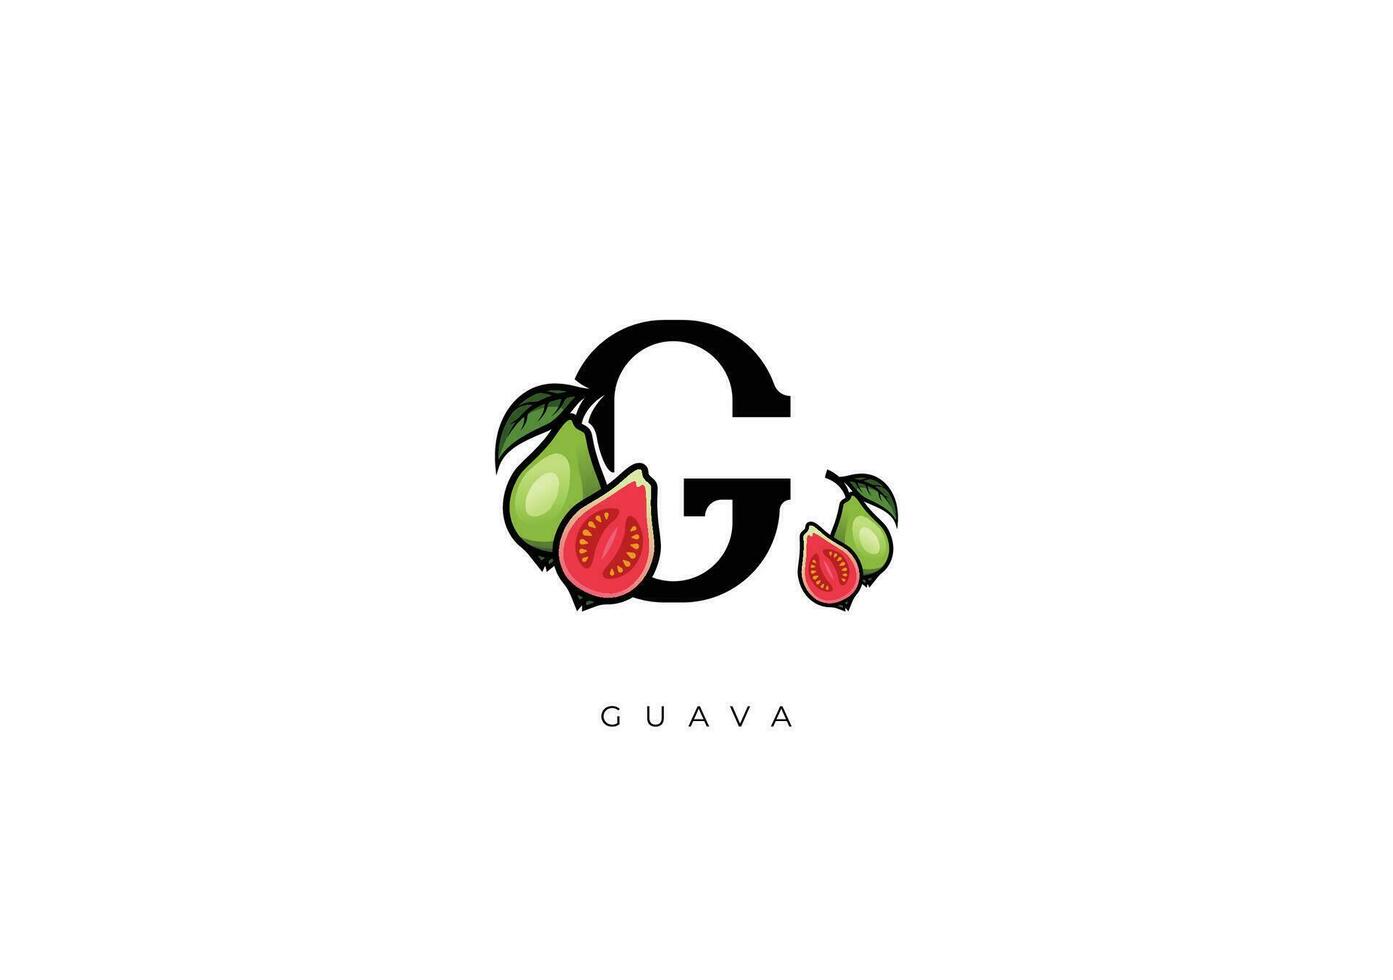 Fruta vector - guayaba